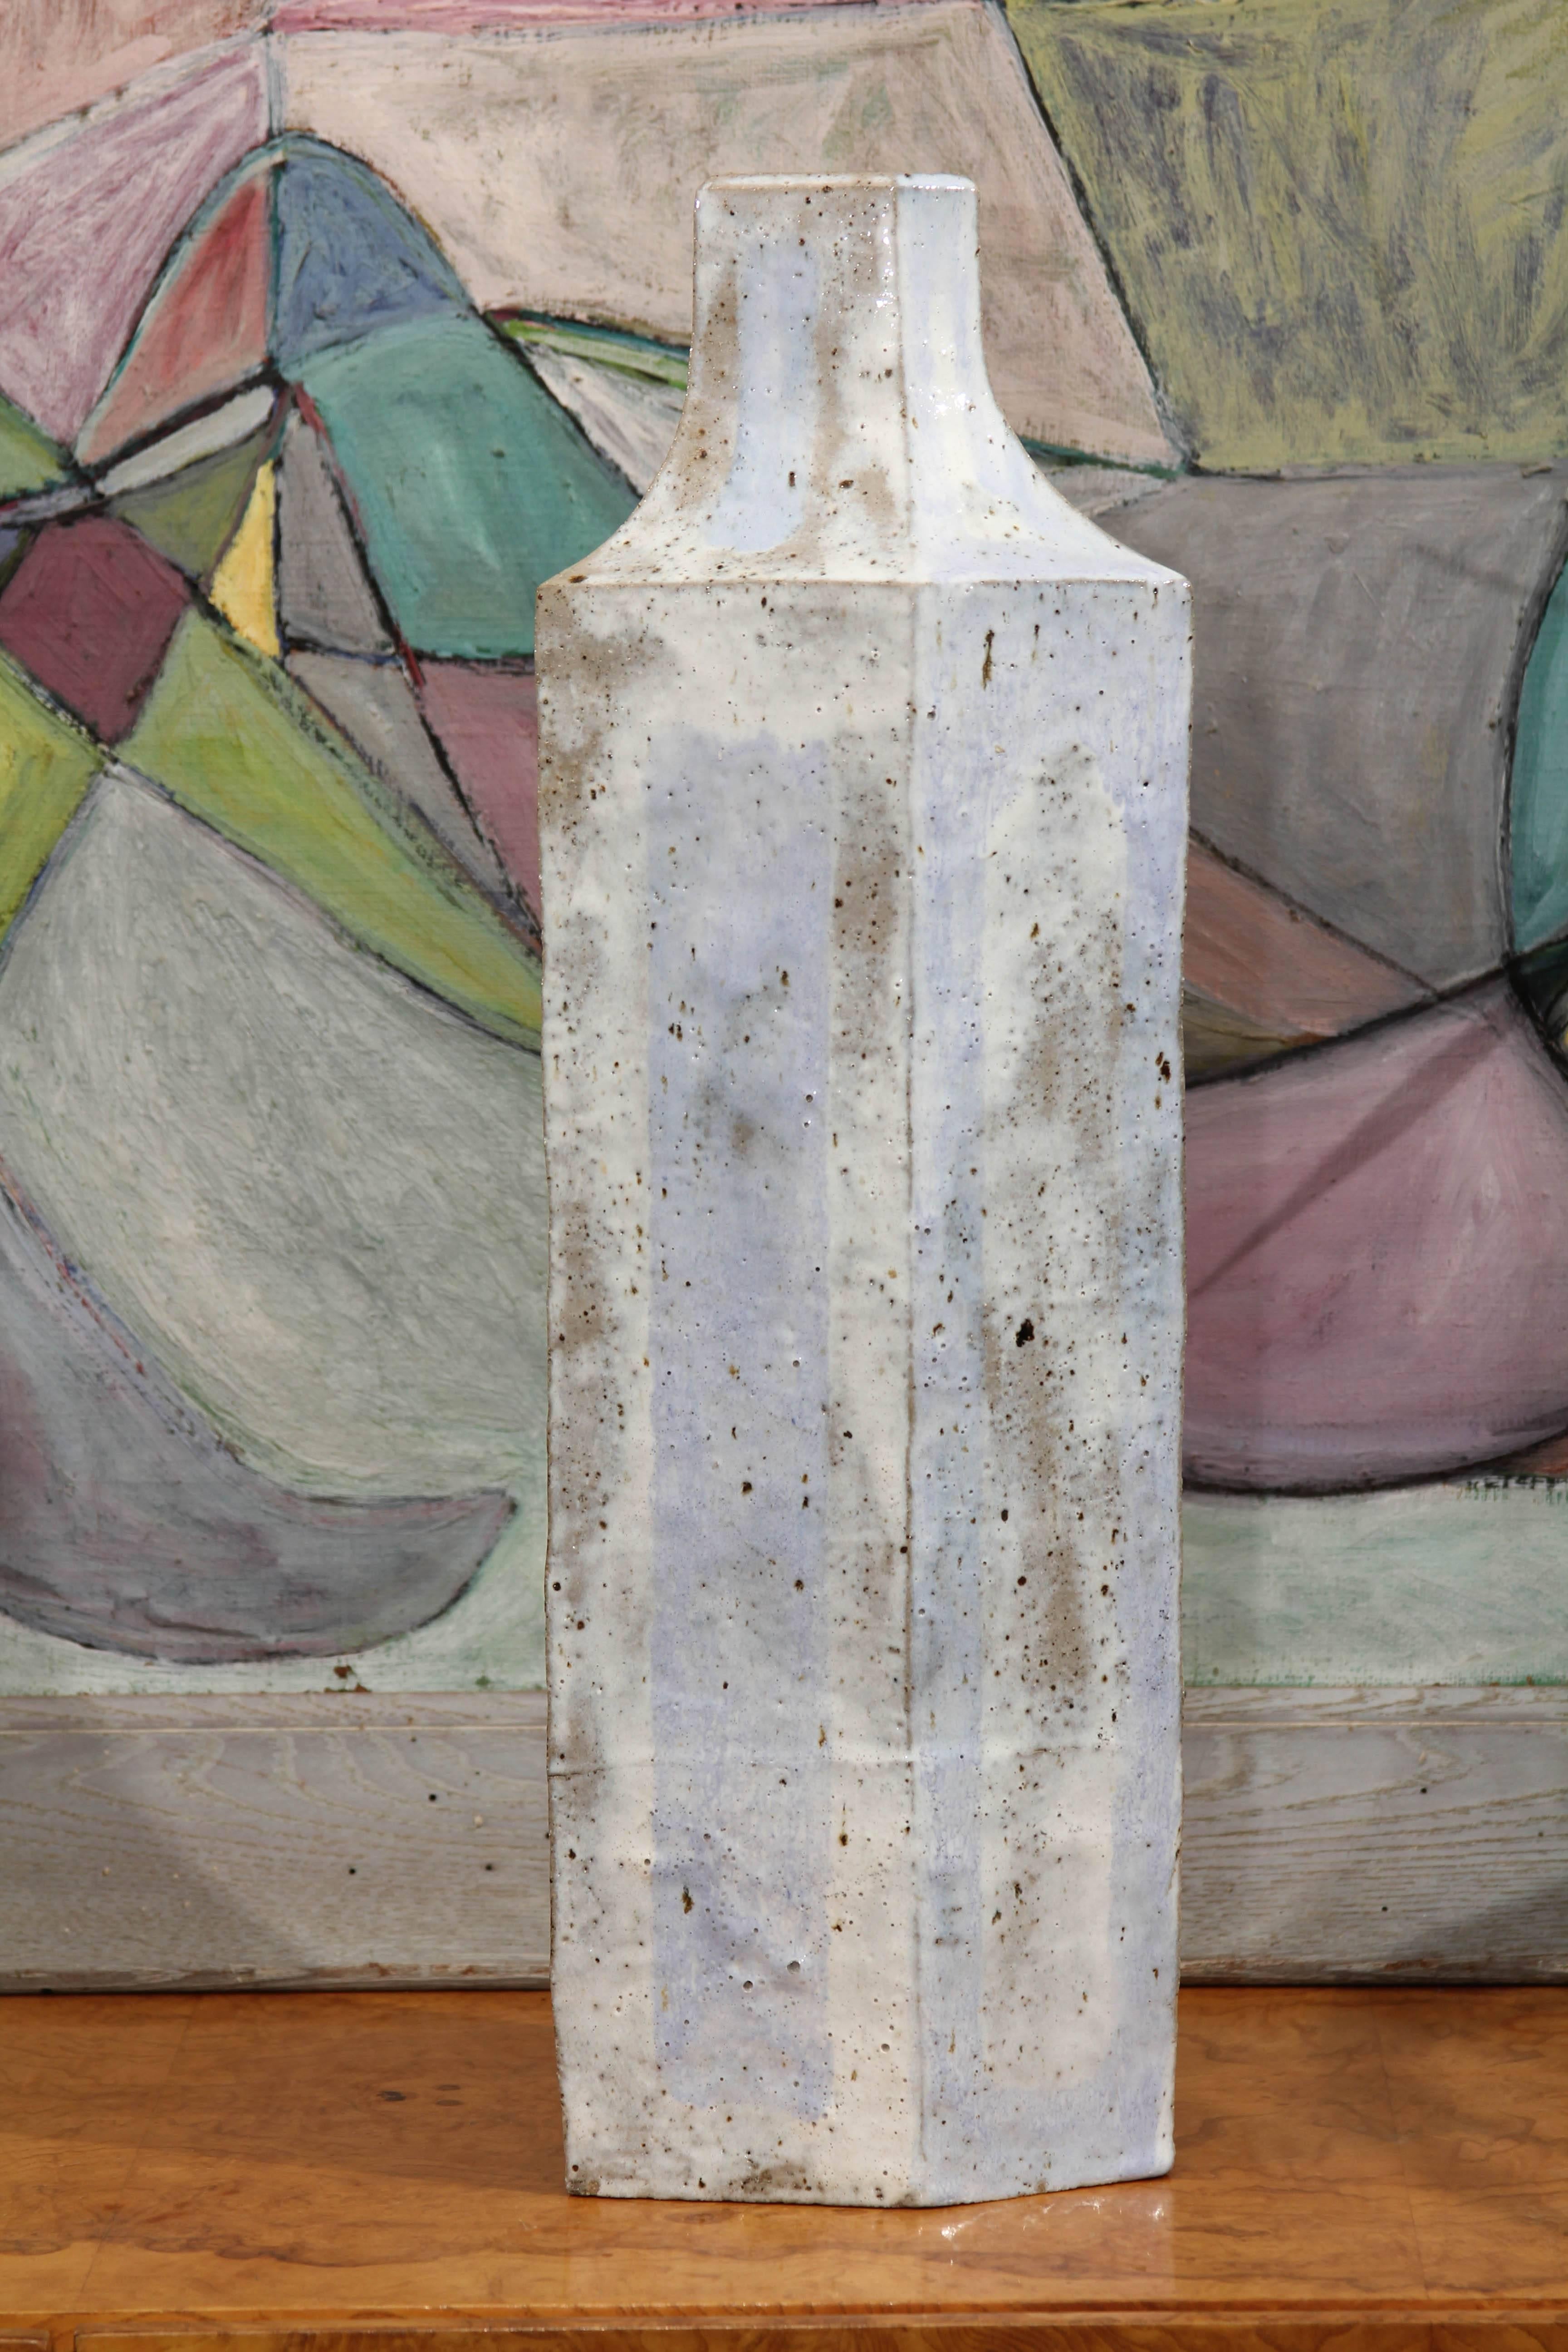 Wonderful five-sided asymmetrical glazed pottery vase or sculpture.